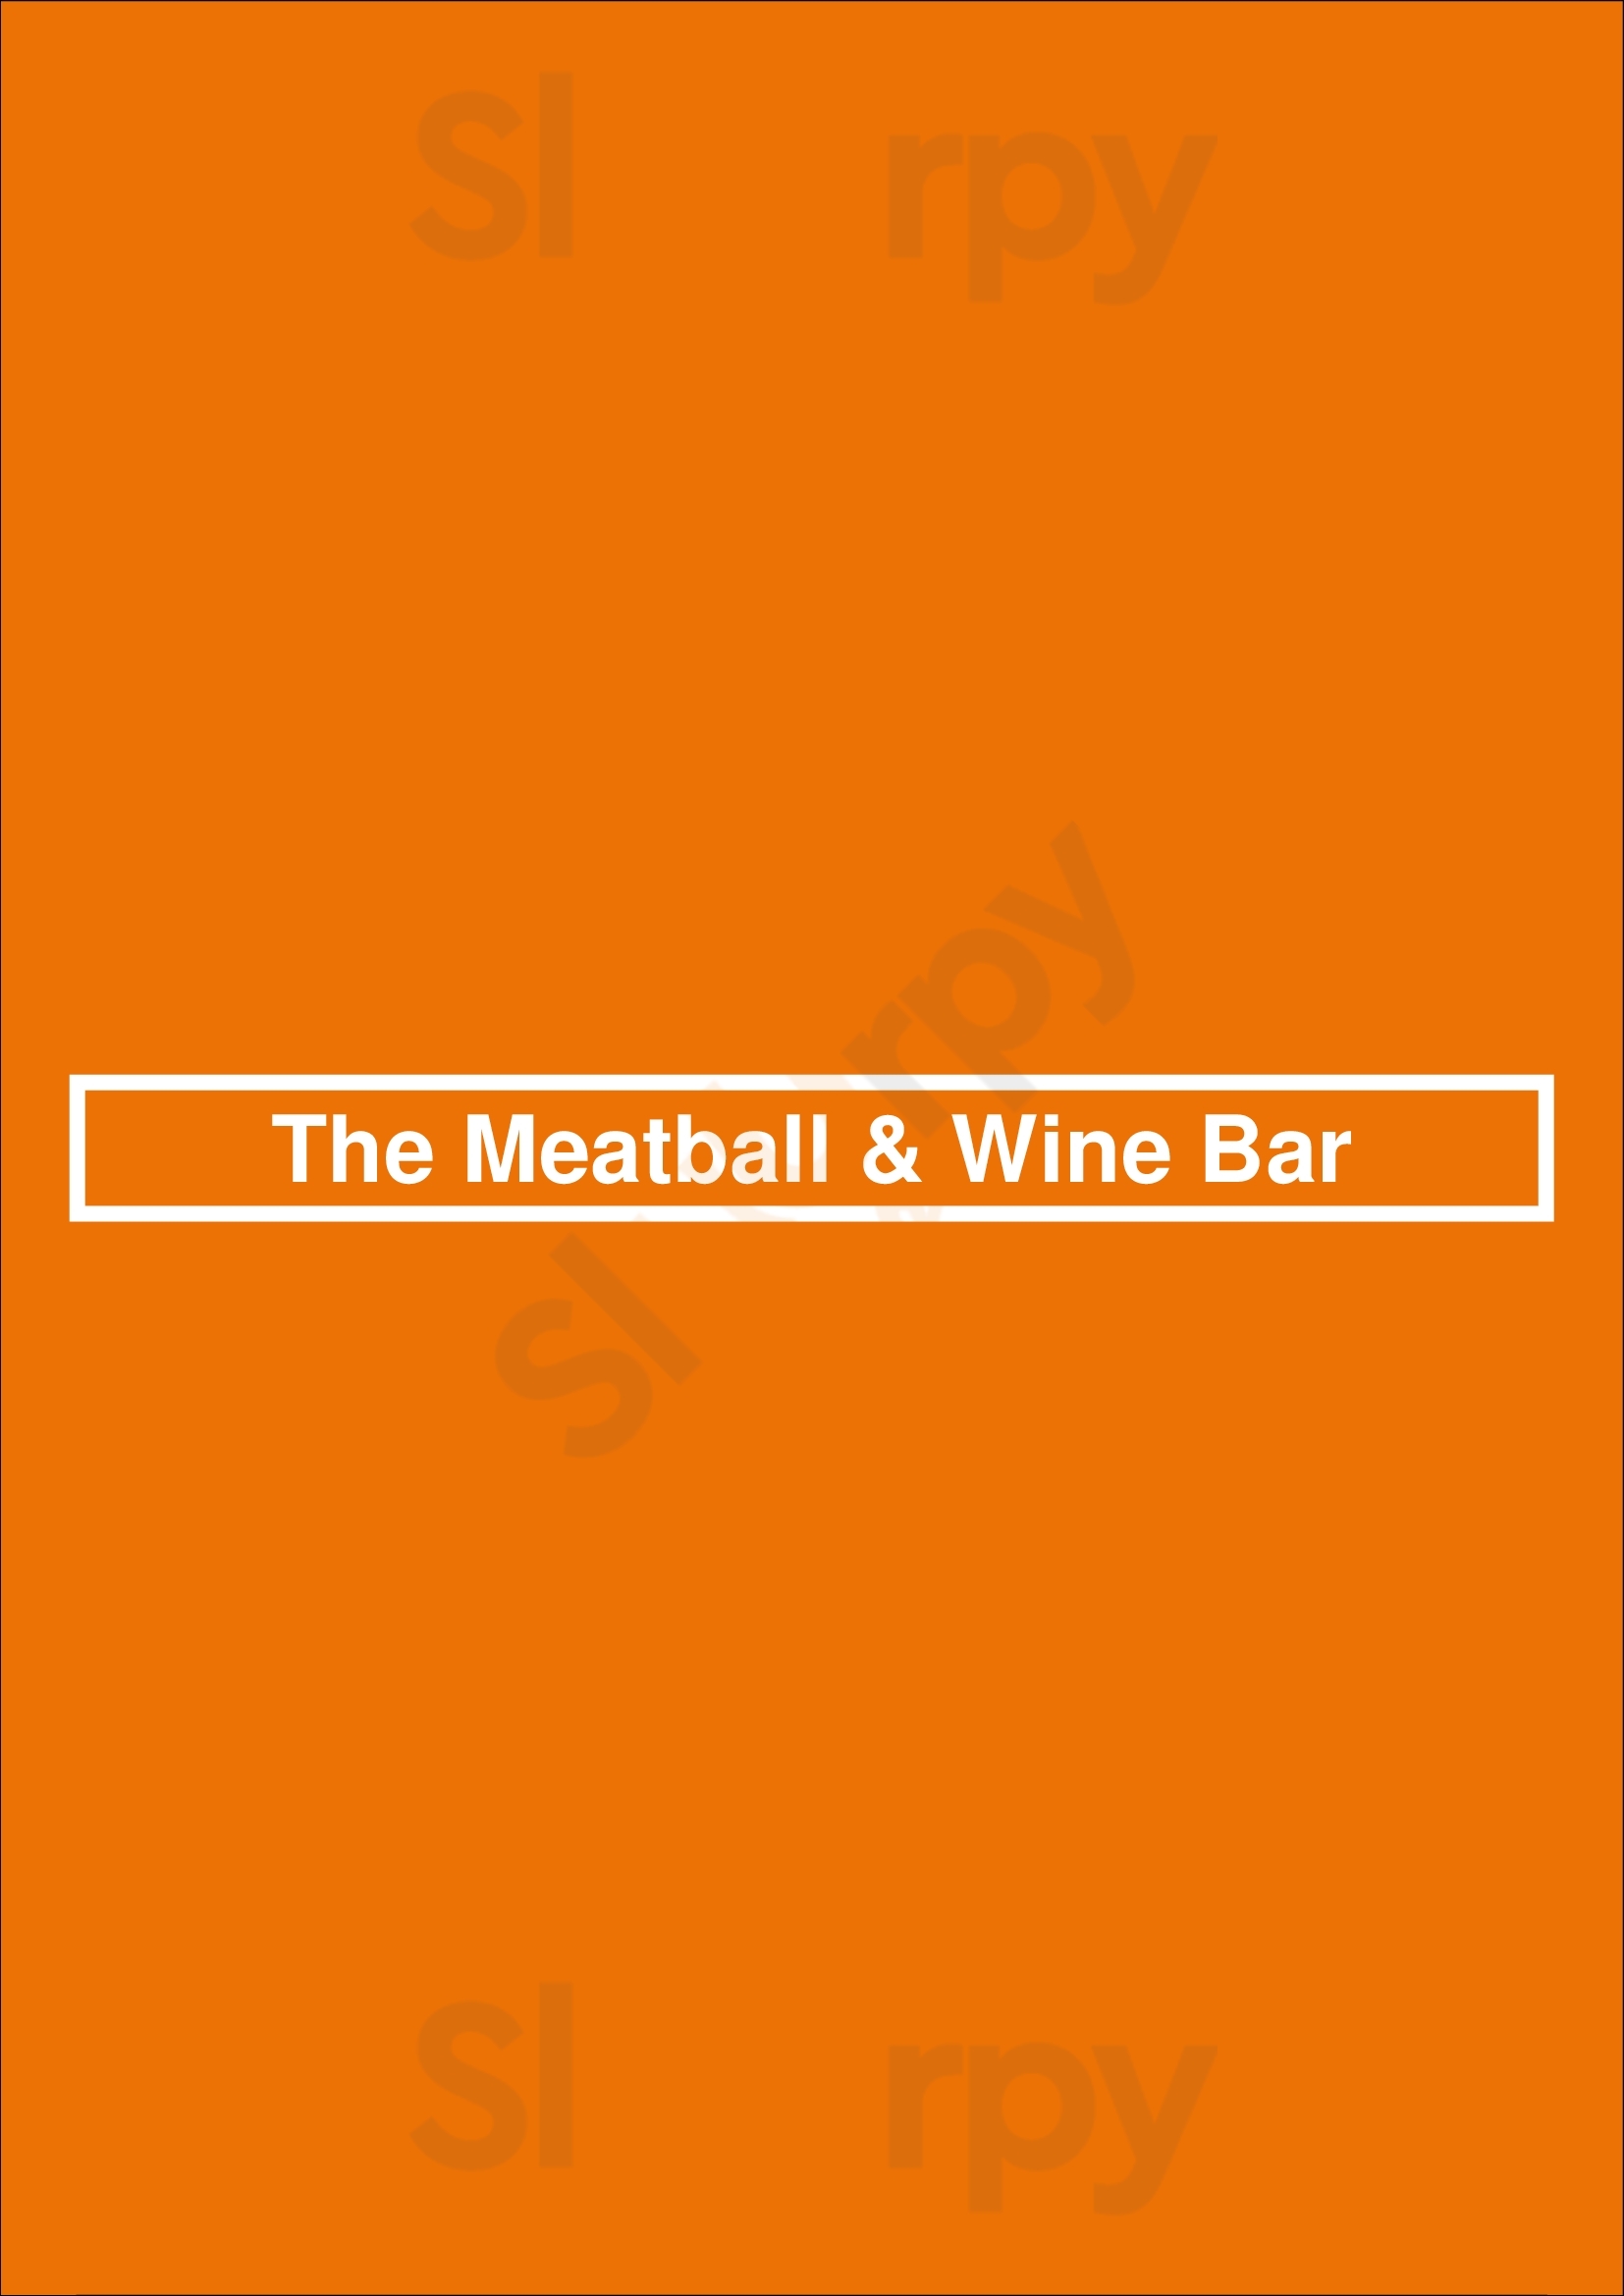 The Meatball & Wine Bar Richmond Menu - 1